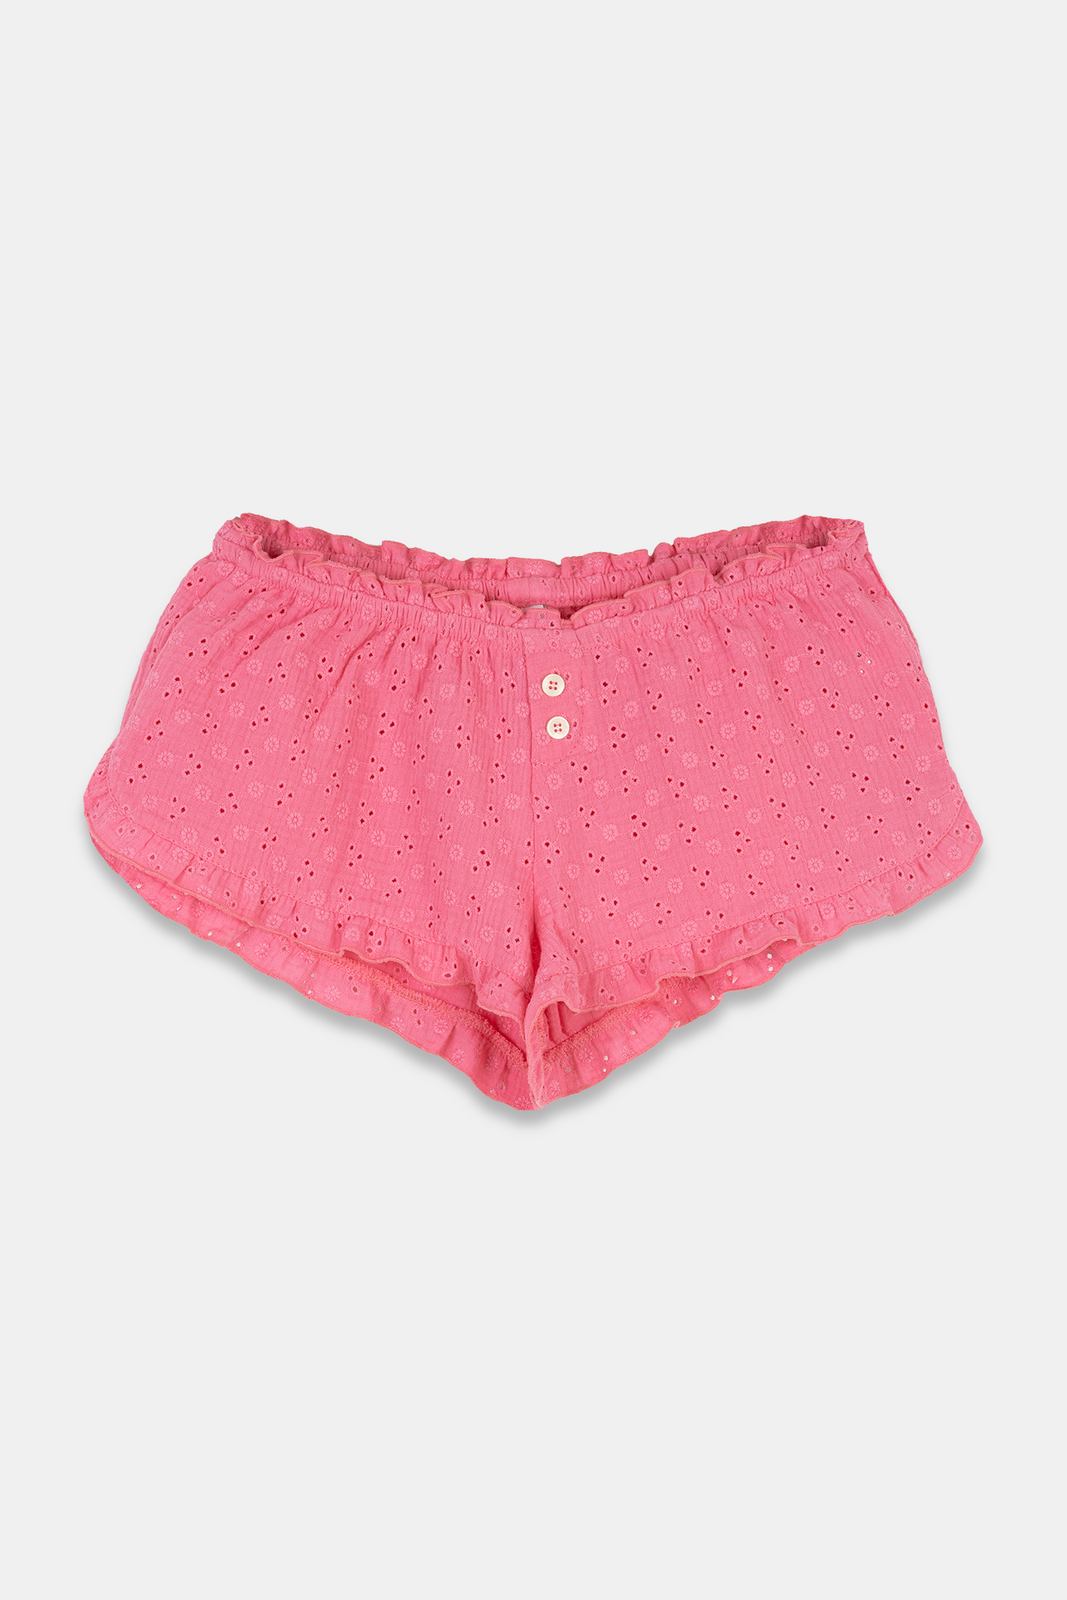 Hot Pink Shorts "Flirty"